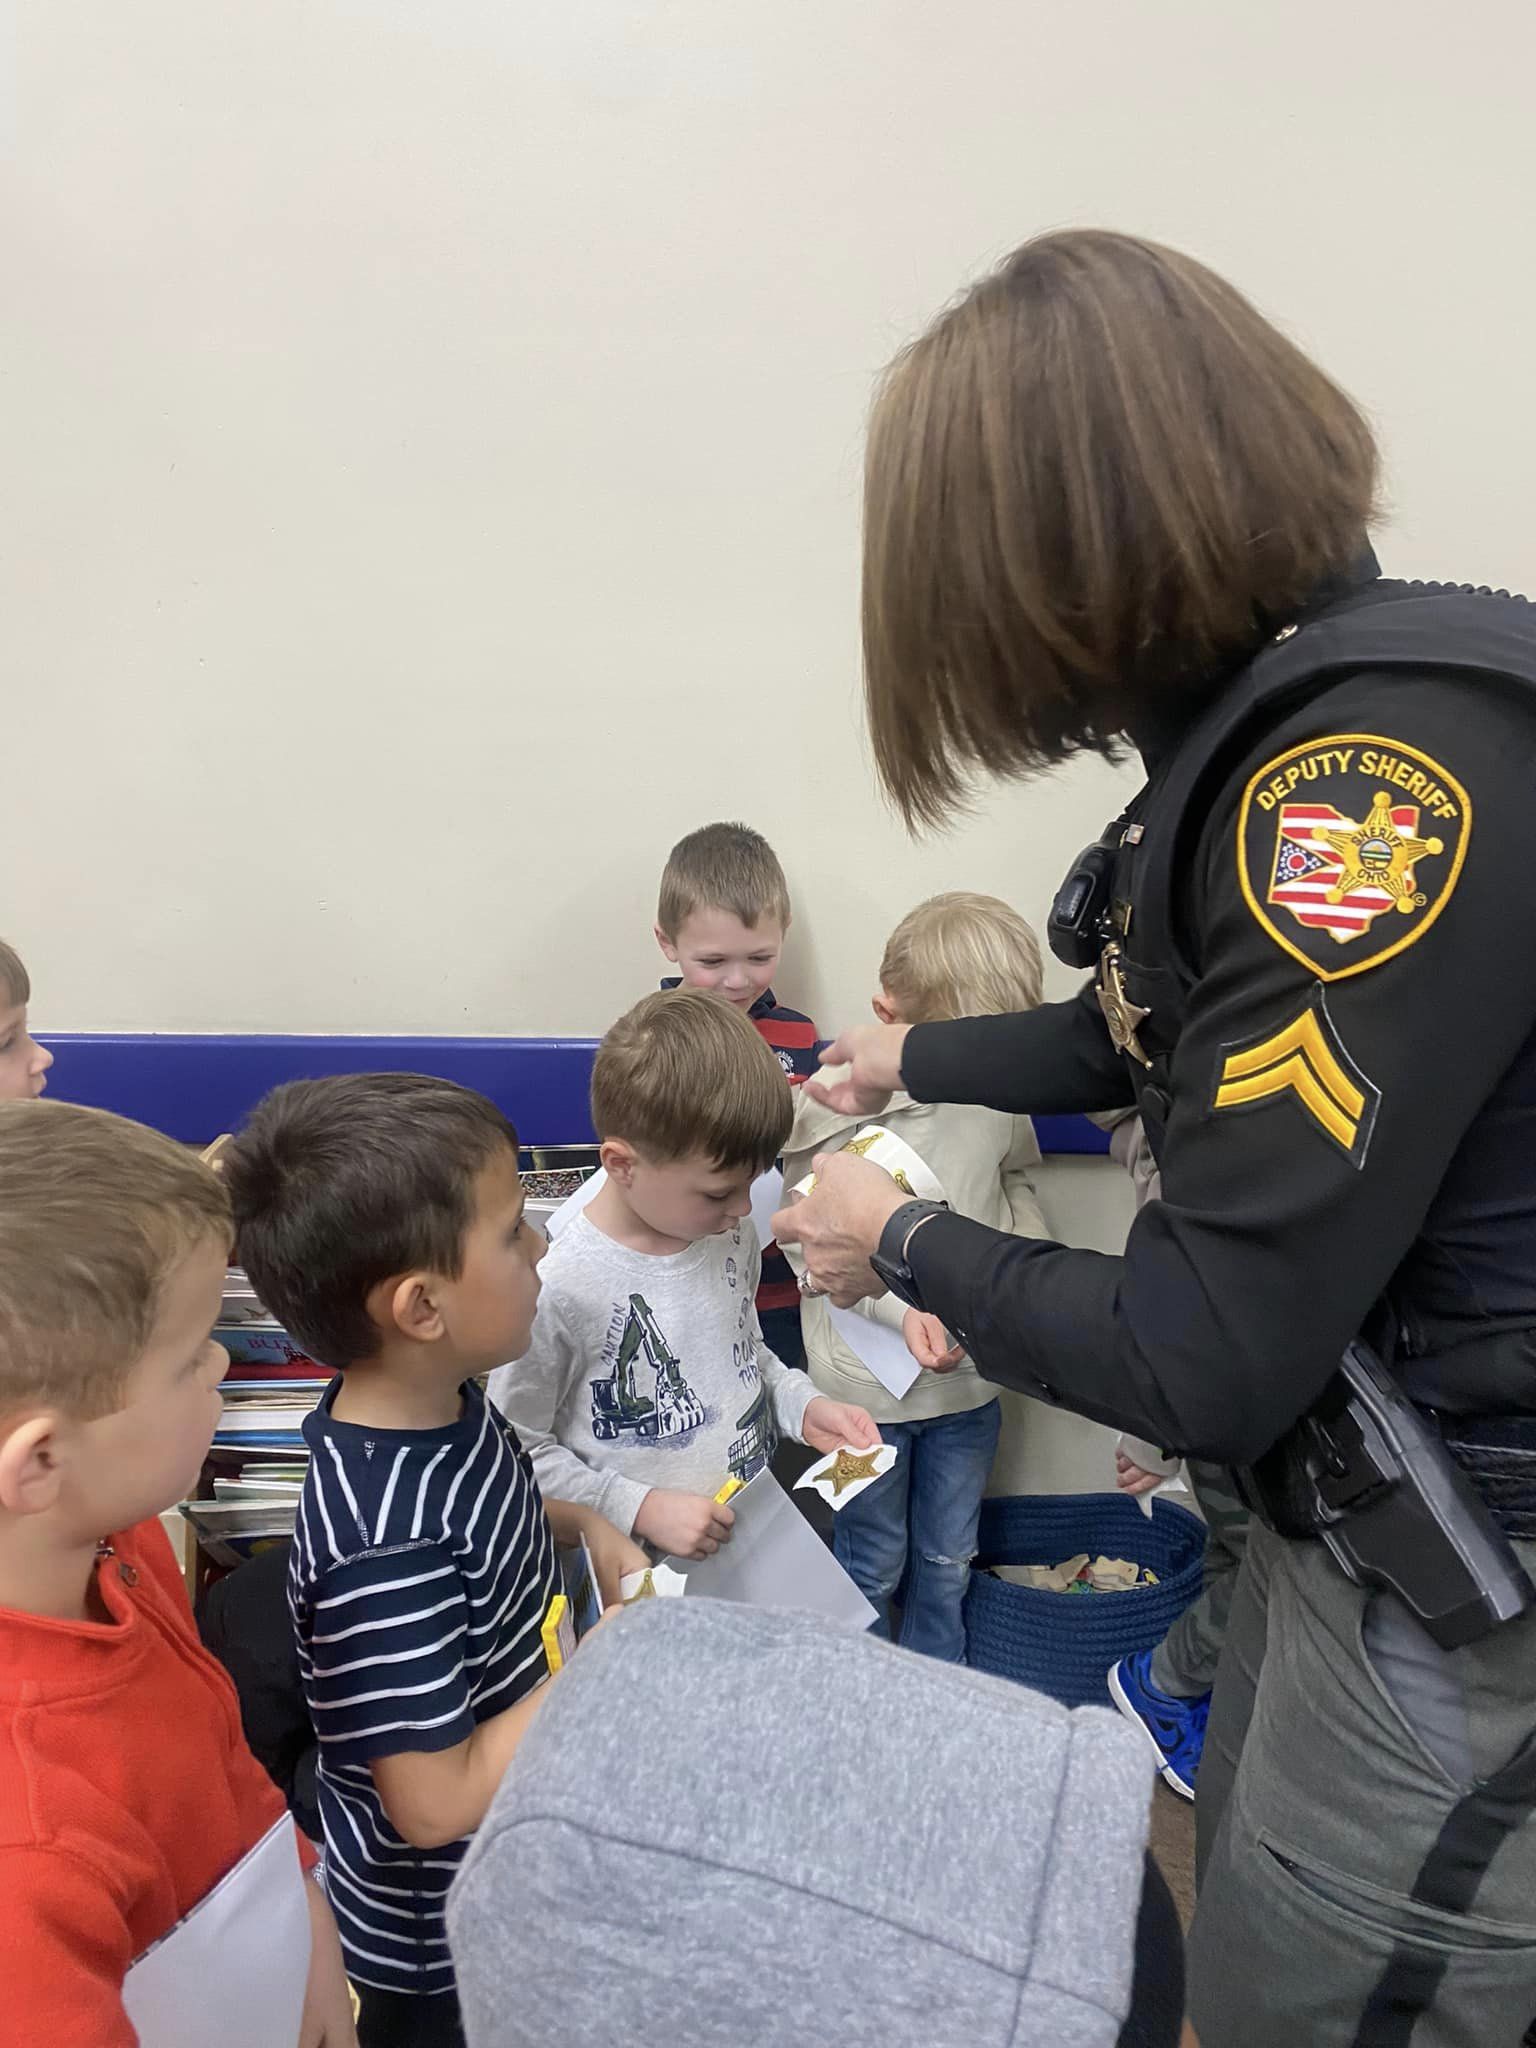 Kids expressing thanks to brave sheriffs